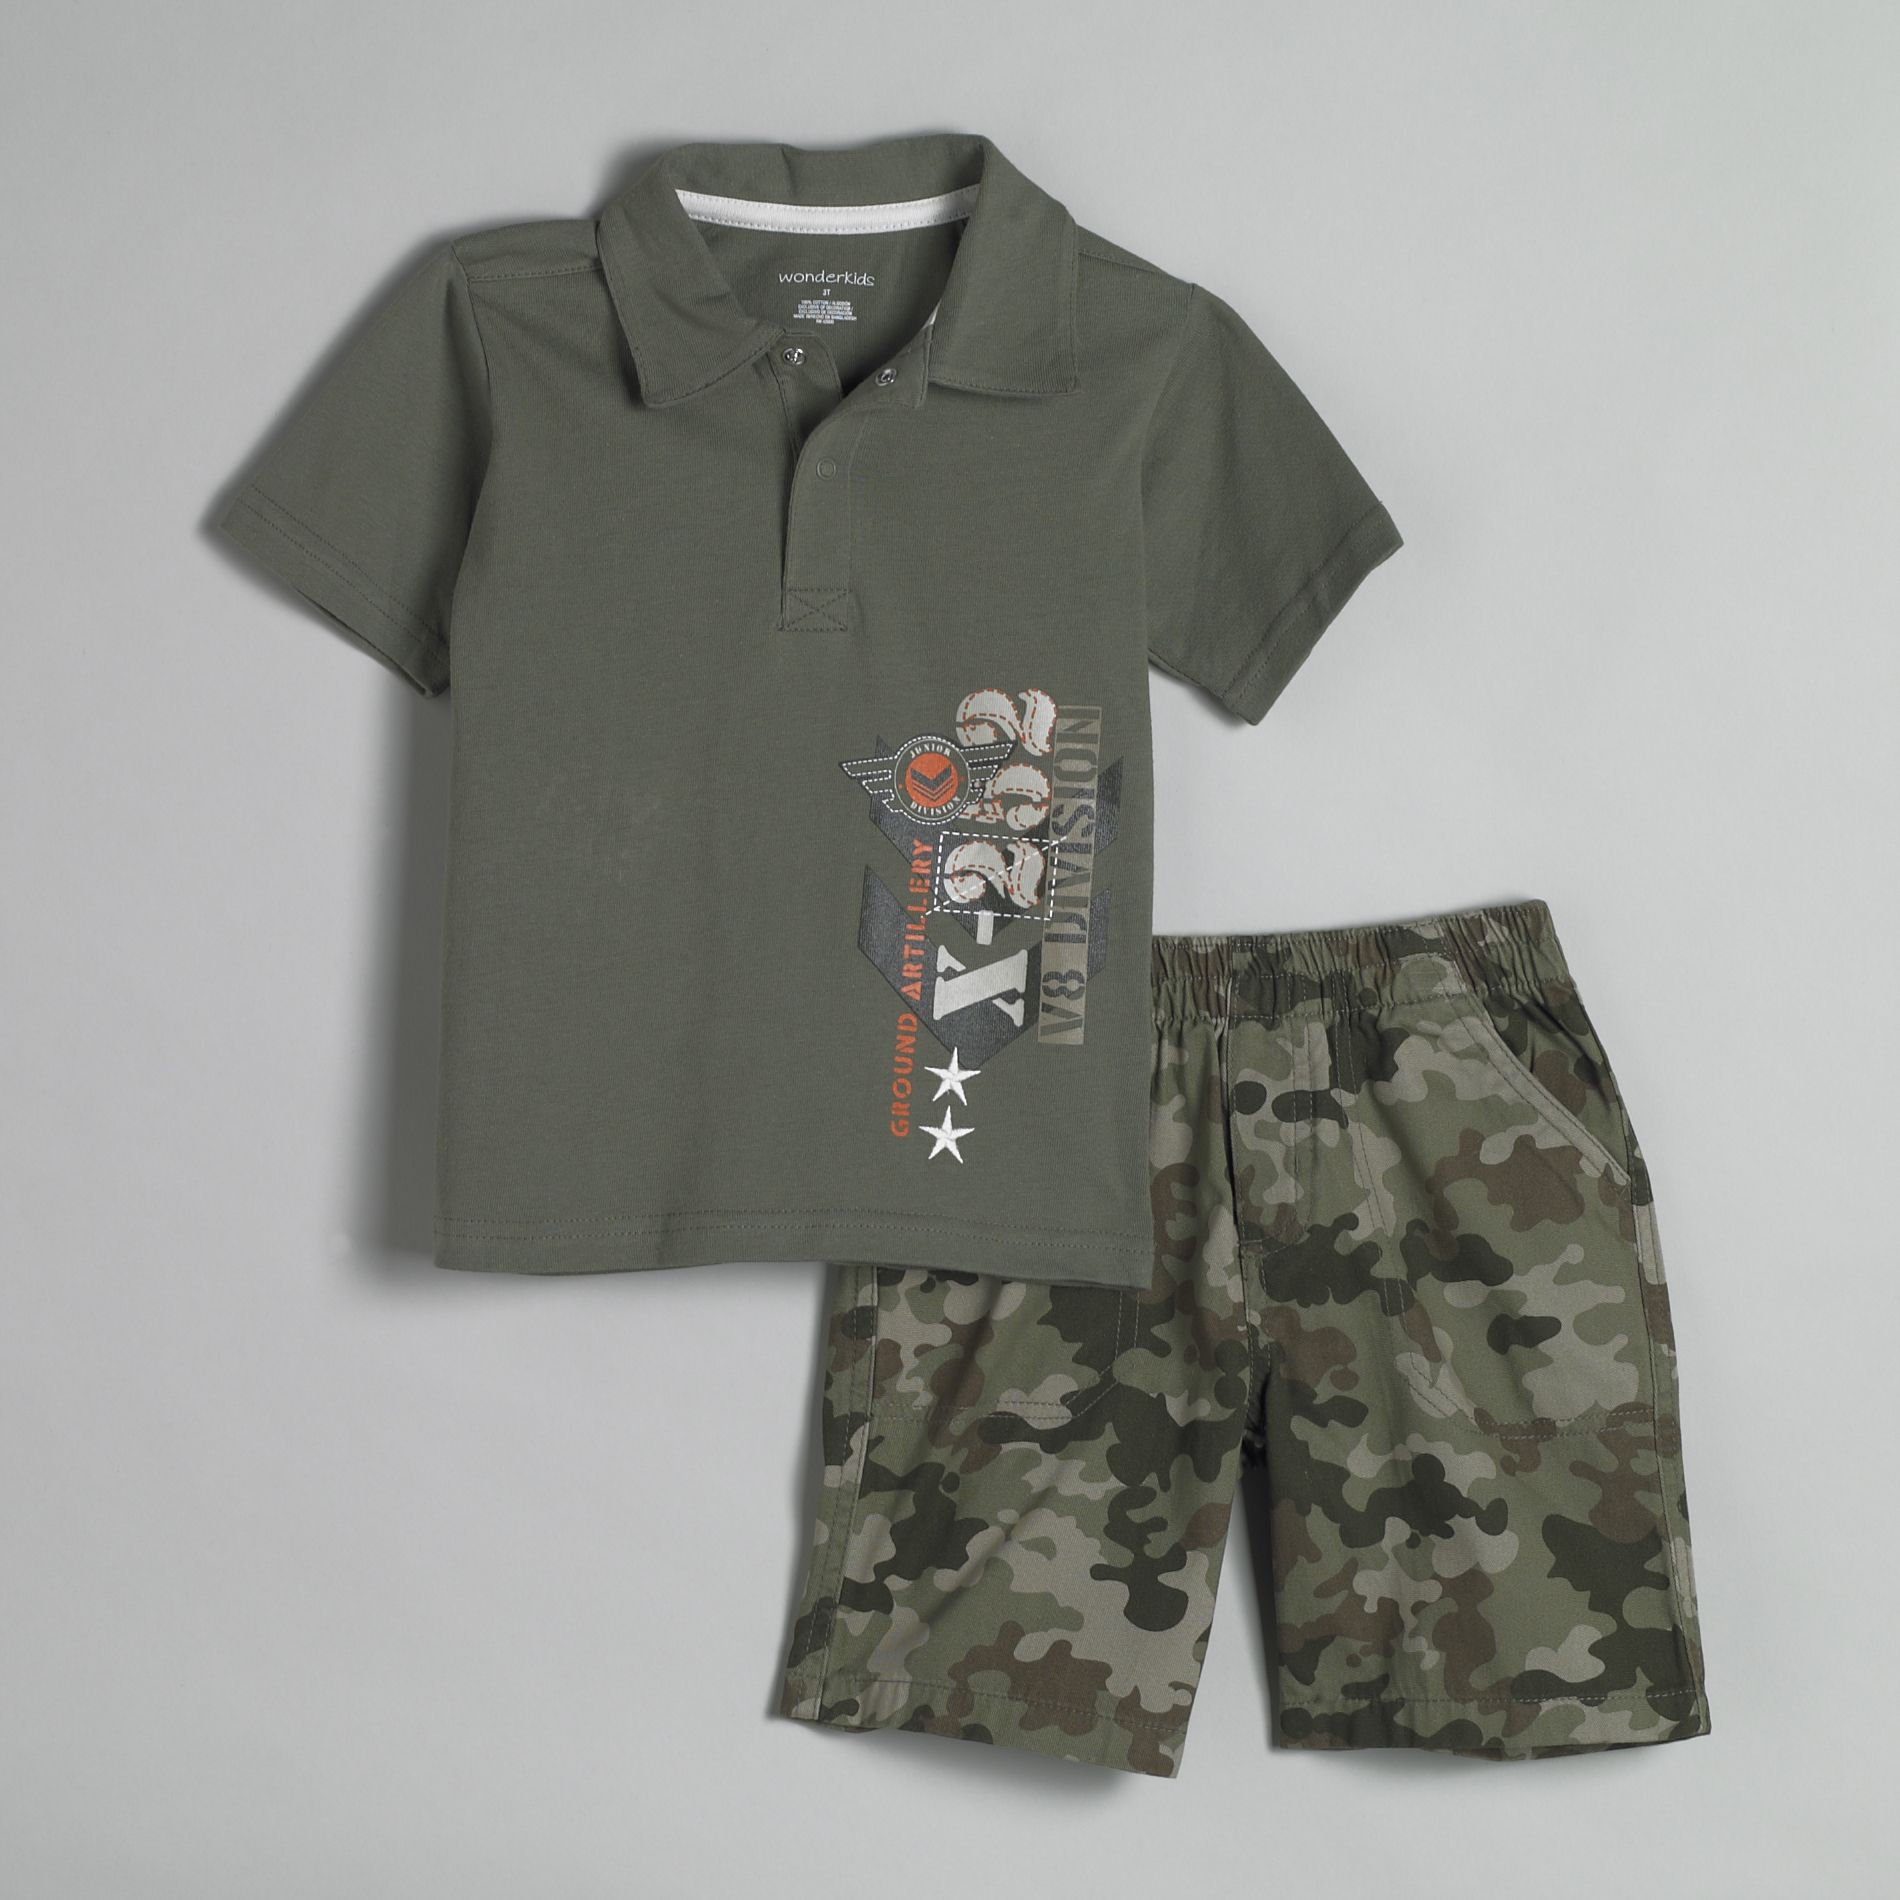 WonderKids Infant & Toddler Boy's Military Style Polo Shirt & Shorts Set